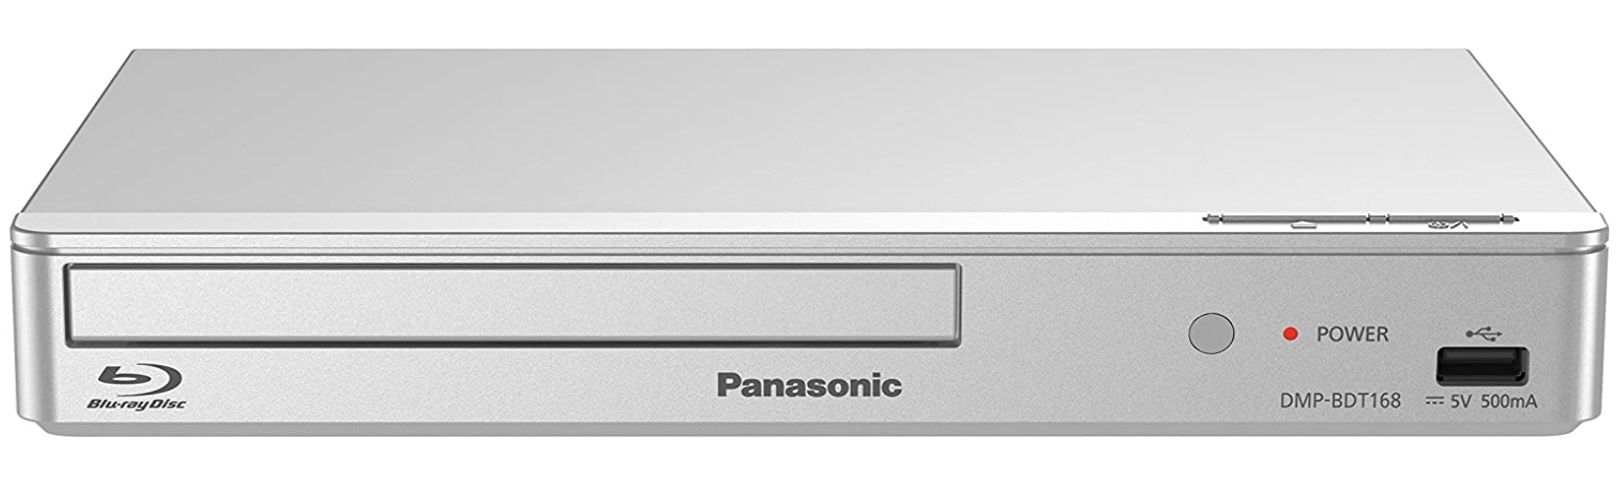 Panasonic DMP BDT168 Blu ray Player in Silber für 54,89€ (statt 66€)